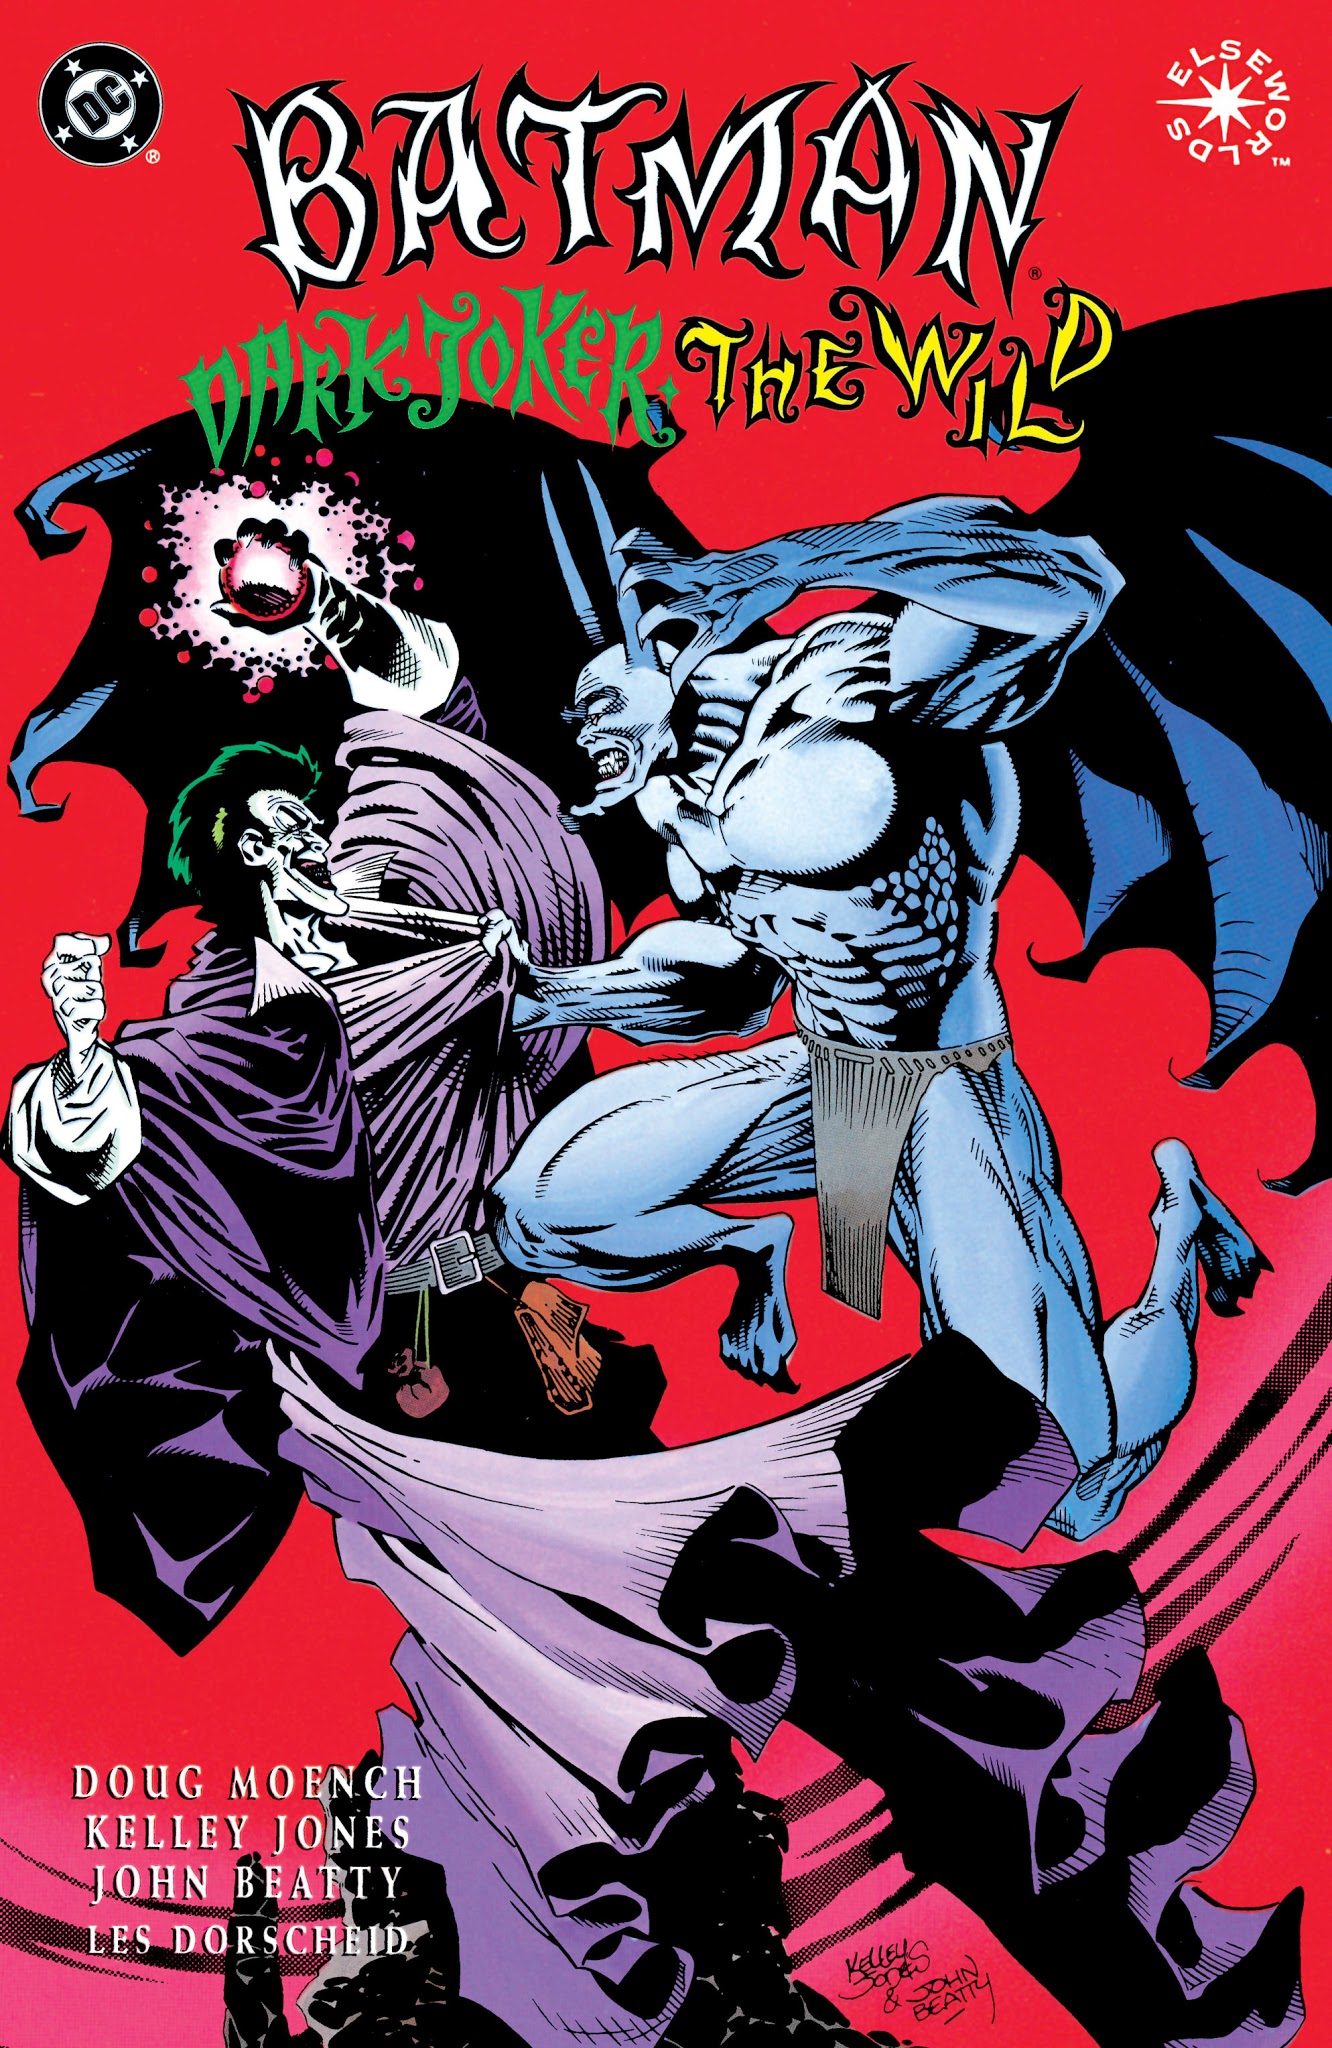 Read online Batman: Dark Joker - The Wild comic -  Issue # TPB - 1